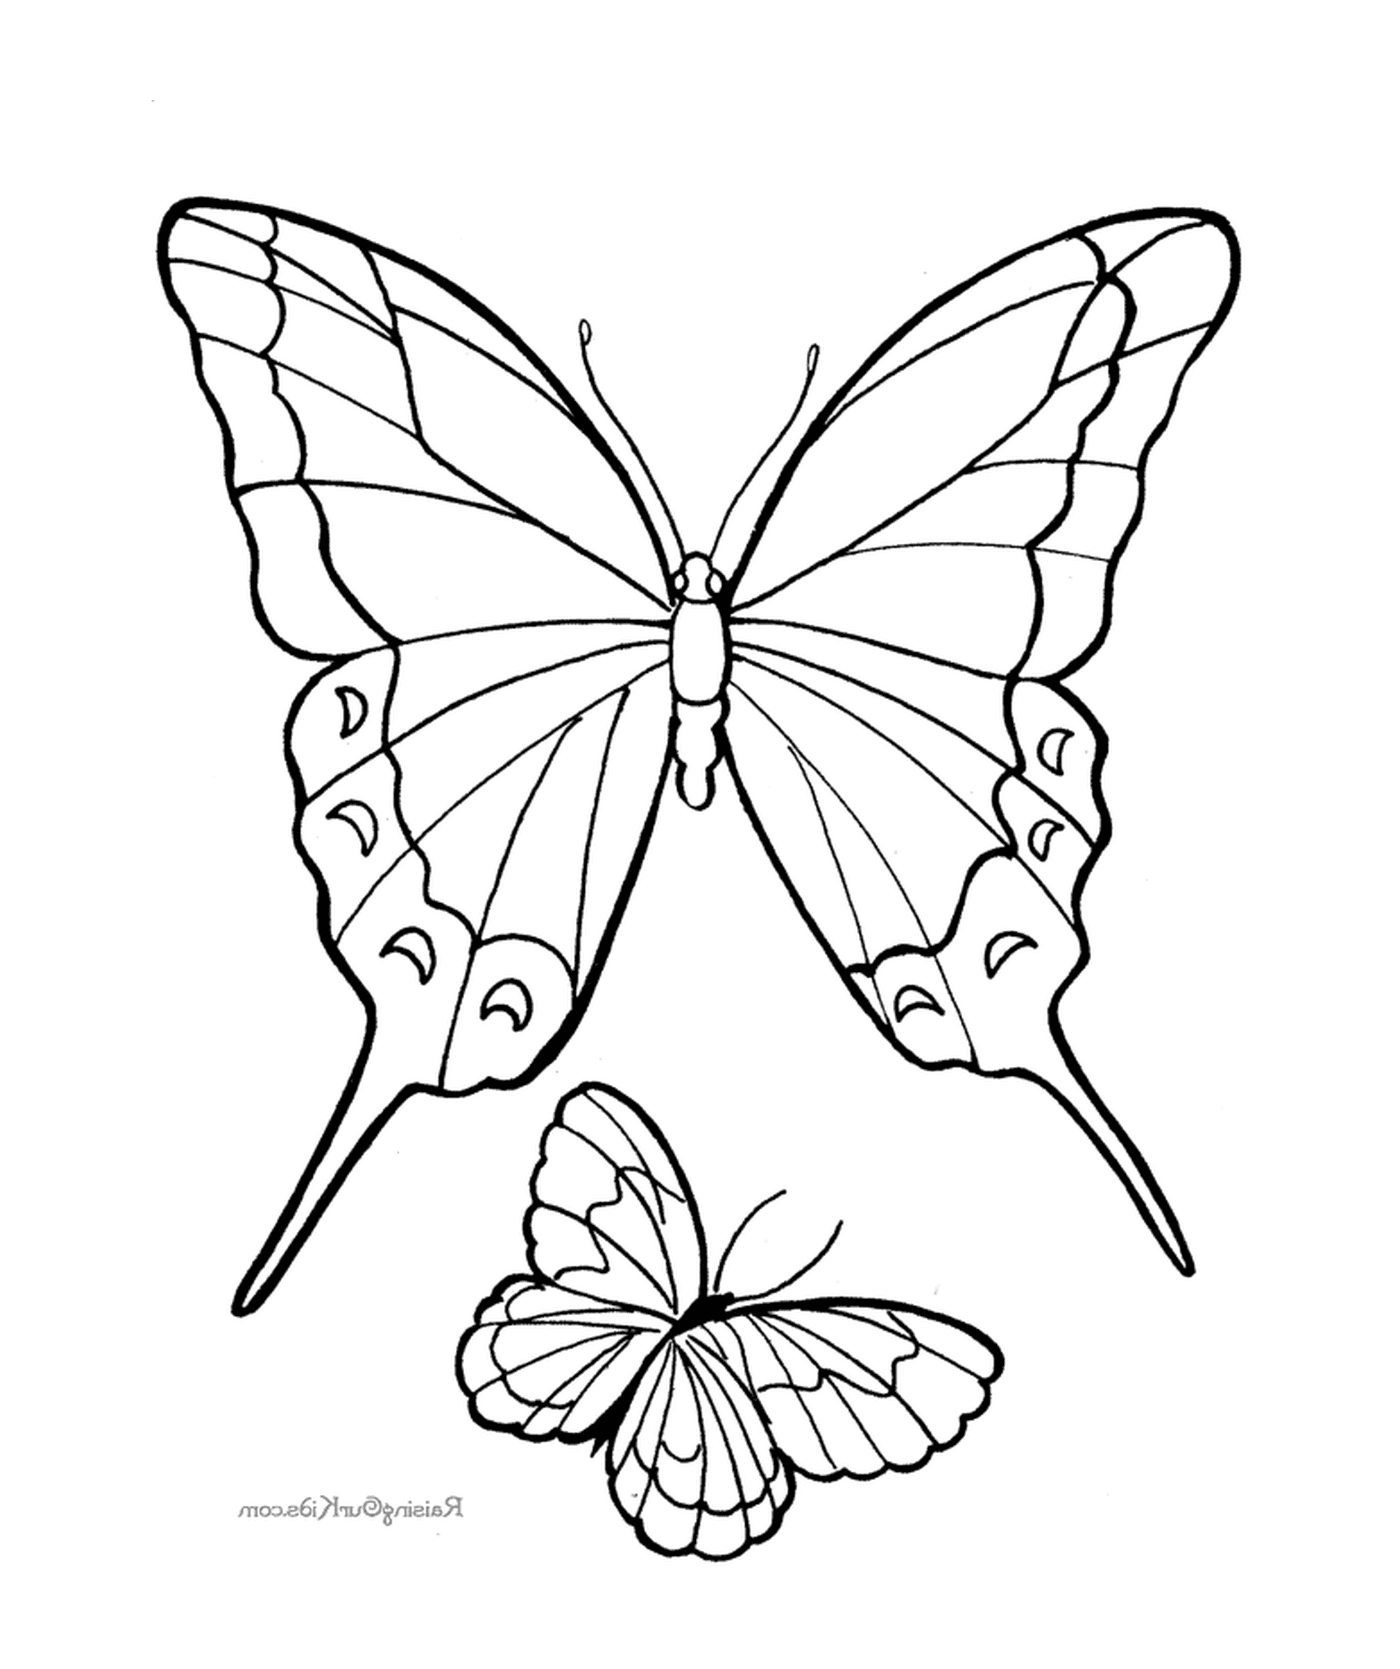  Zwei Schmetterlinge treffen sich 